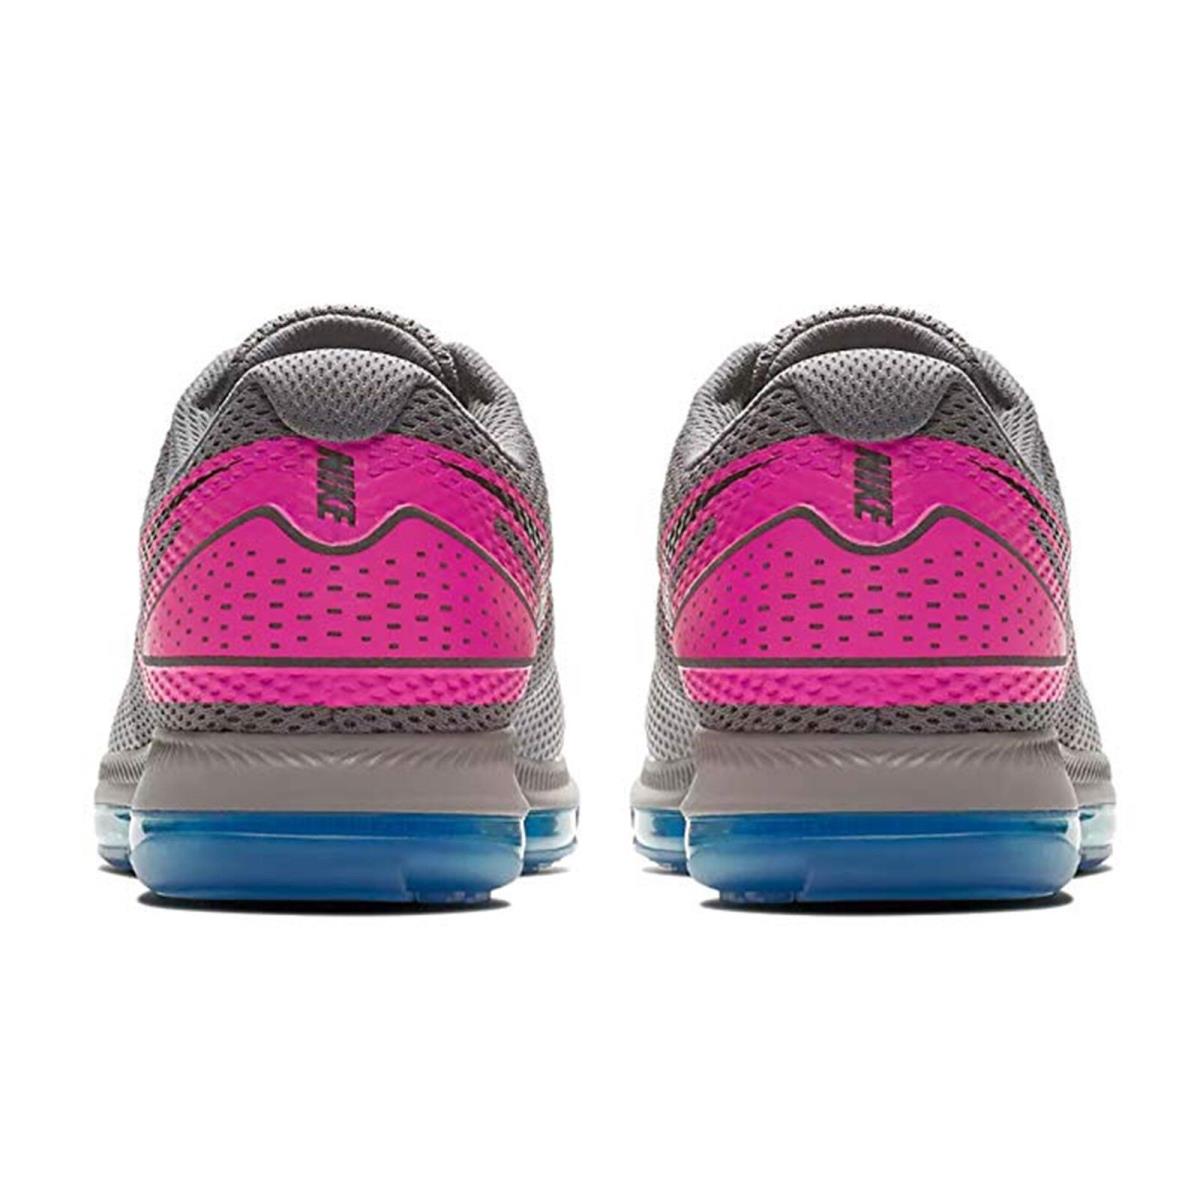 Nike Zoom All Out Low 2 AJ0035 - 009 Men`s Running Shoes.new NO Lid - GUNSMOKE/BLACK-PINL BLAST, Manufacturer: GUNSMOKE/BLACK-PINL BLAST